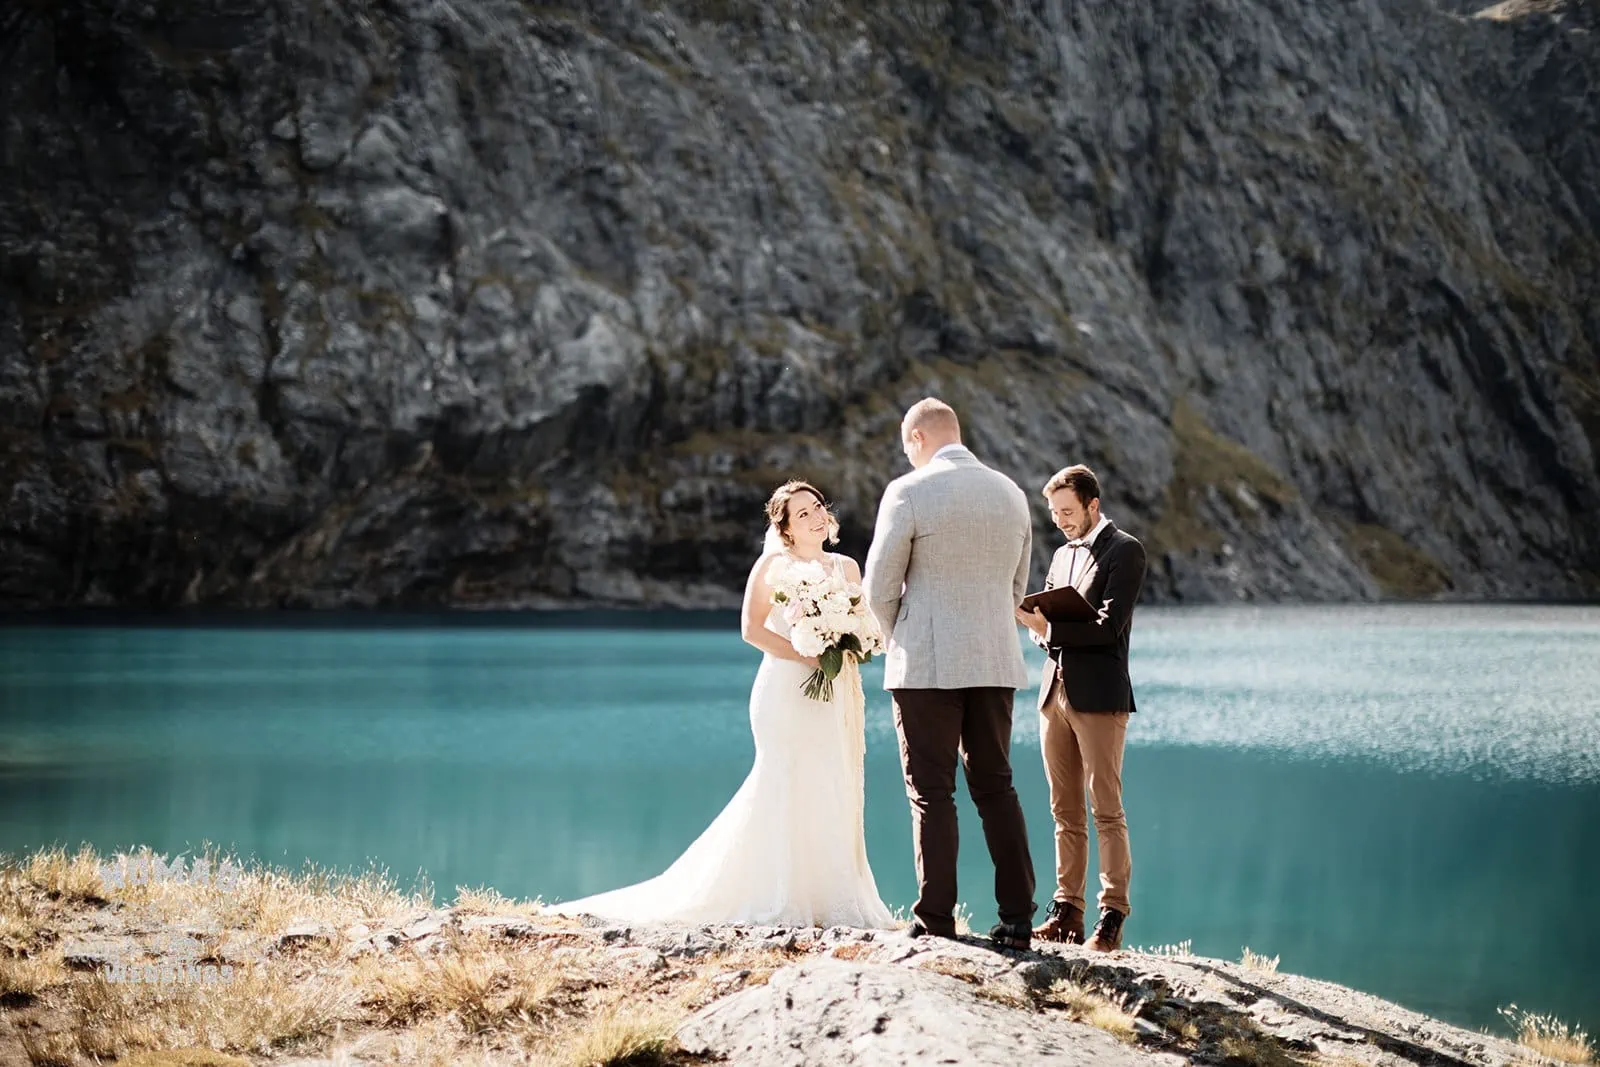 Amy & Eden exchange vows during their enchanting Lake Erskine heli elopement wedding.